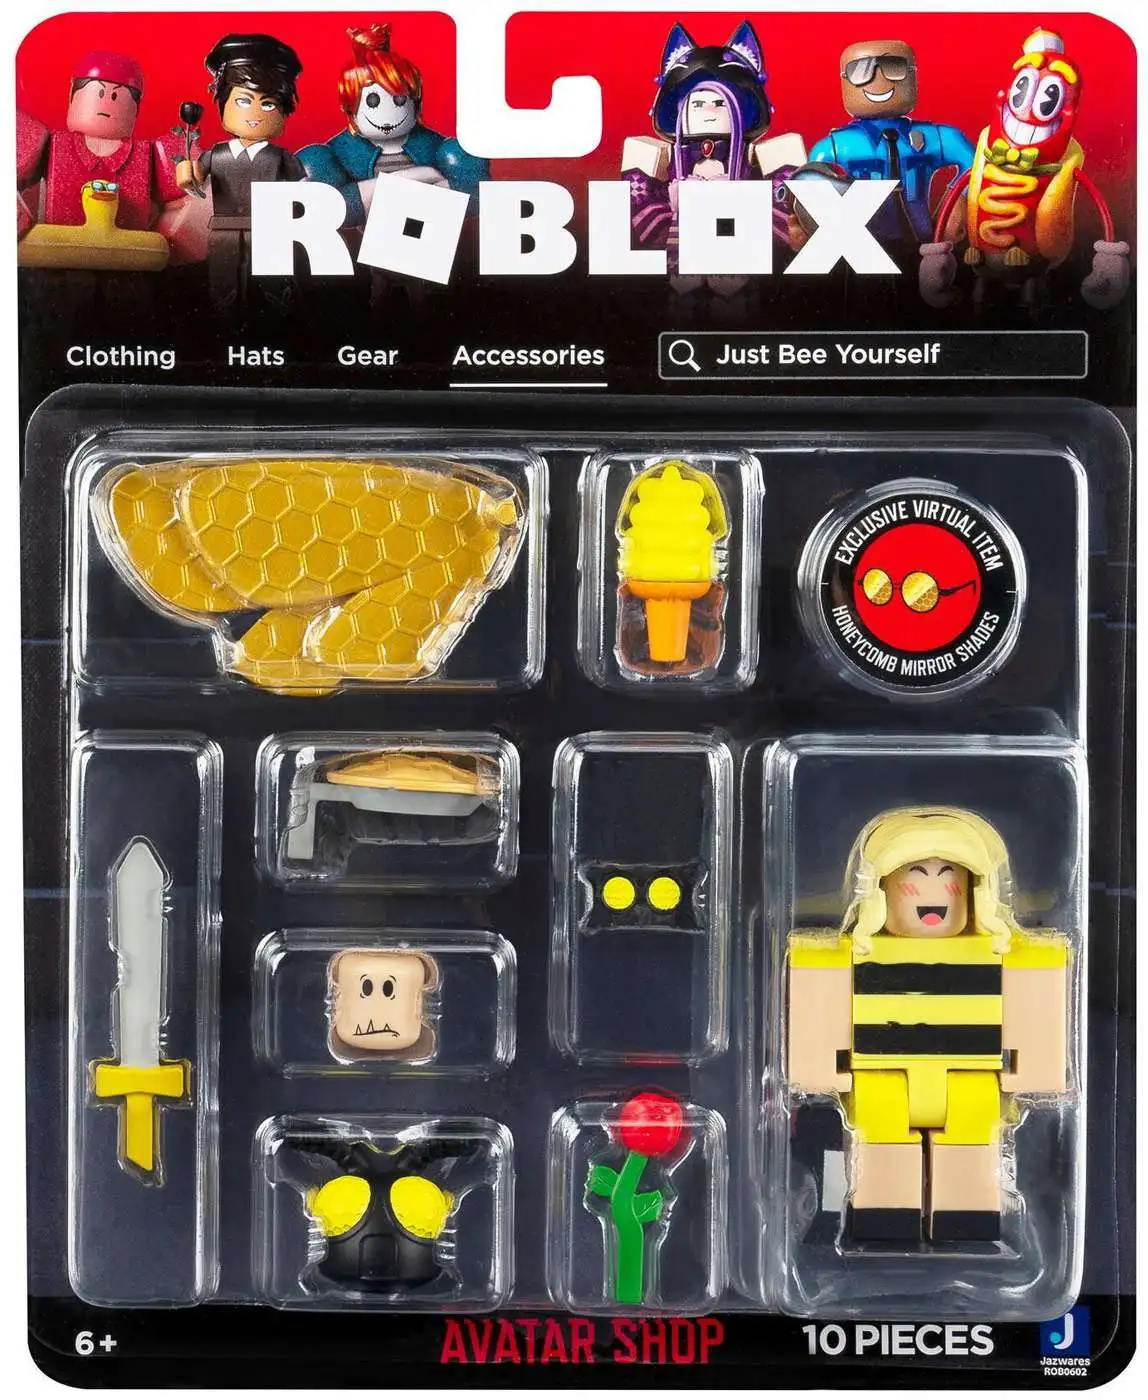 ROBLOX Merely 3-inch mini Figure